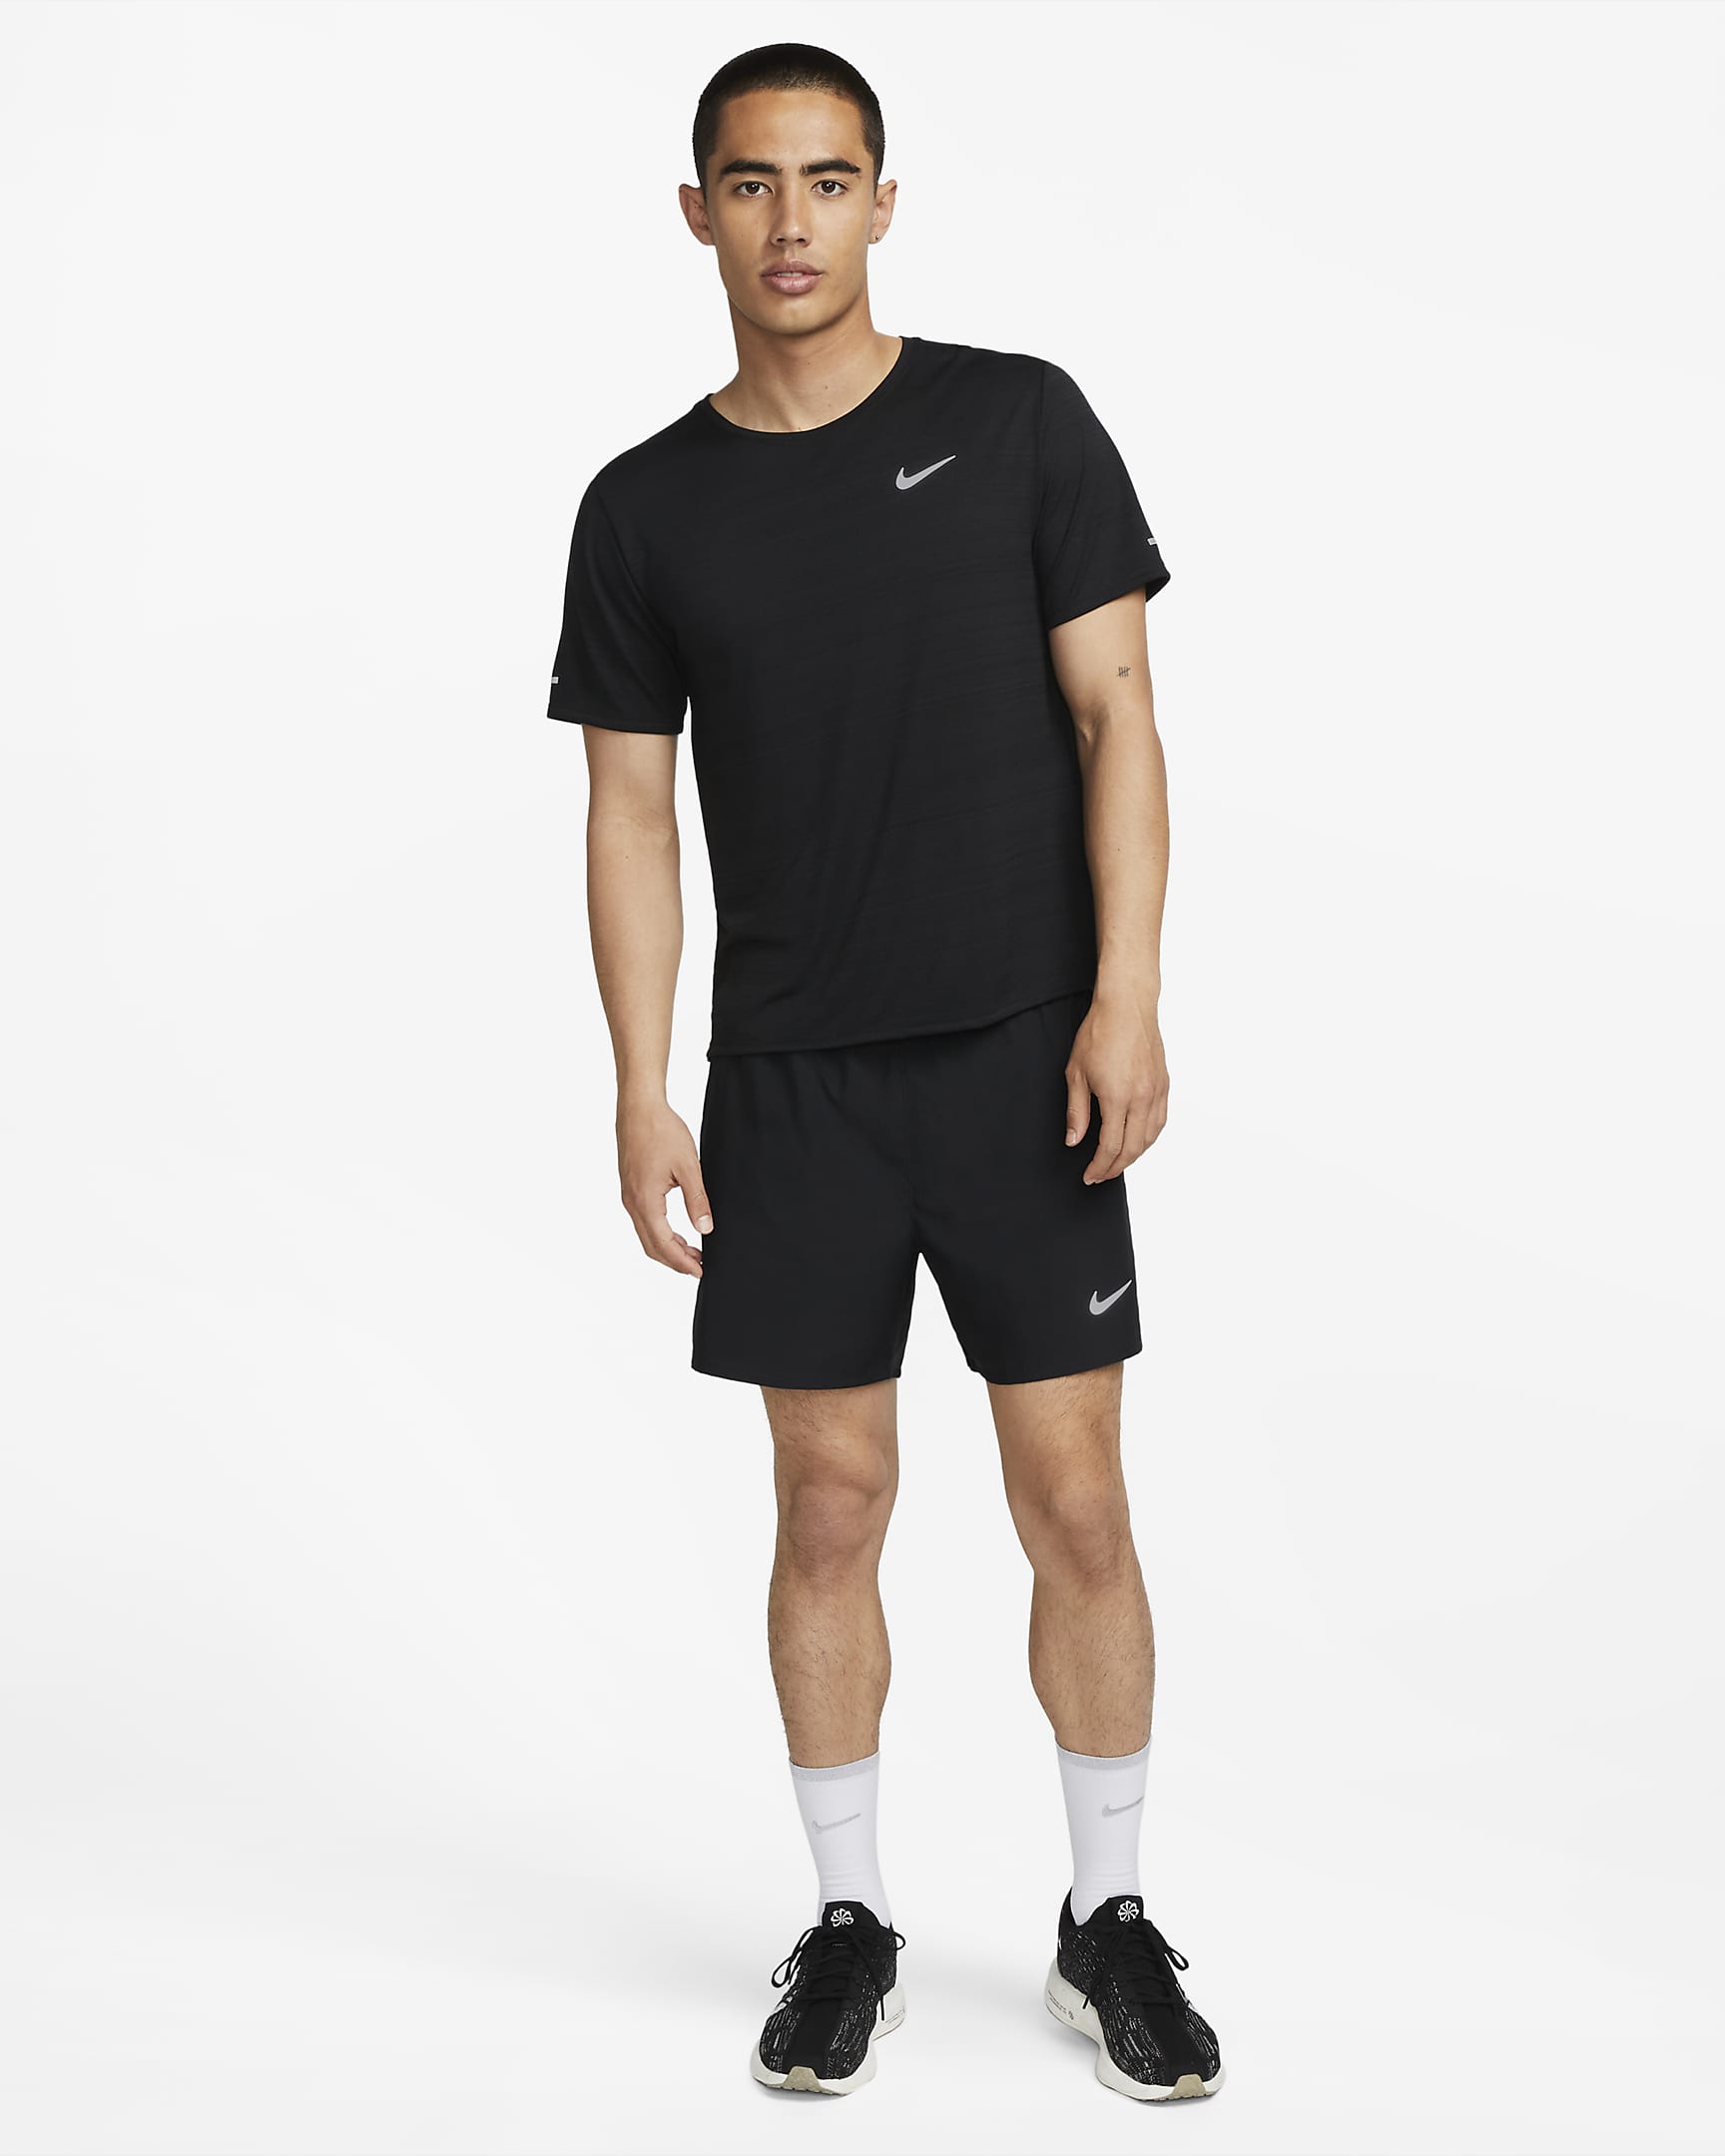 Nike Dri-FIT Challenger Men's 13cm (approx.) Brief-Lined Versatile Shorts - Black/Black/Black